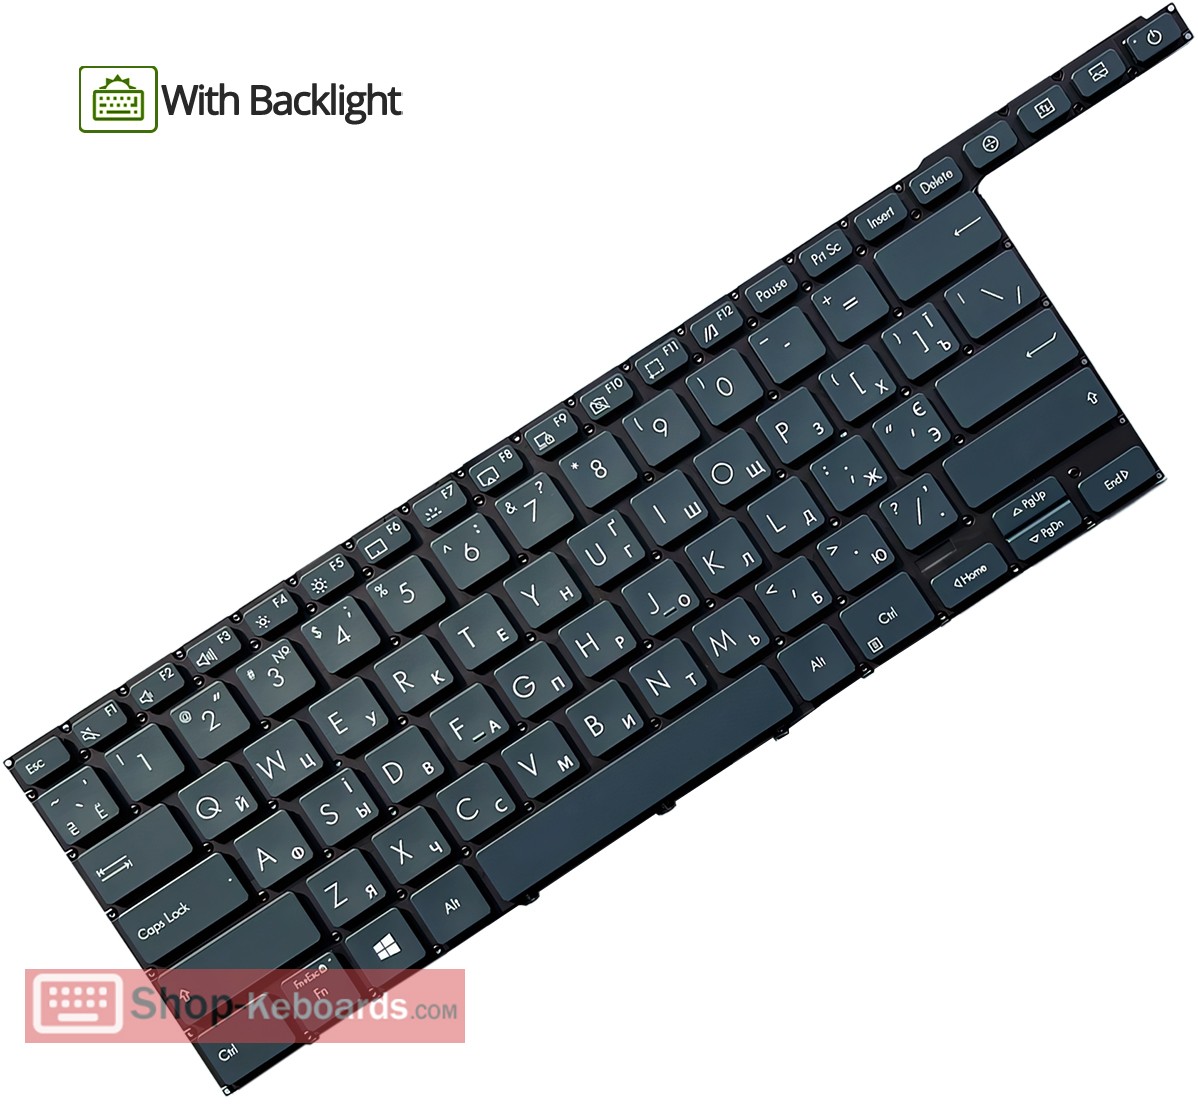 Asus 0KNB0-6823RU00  Keyboard replacement